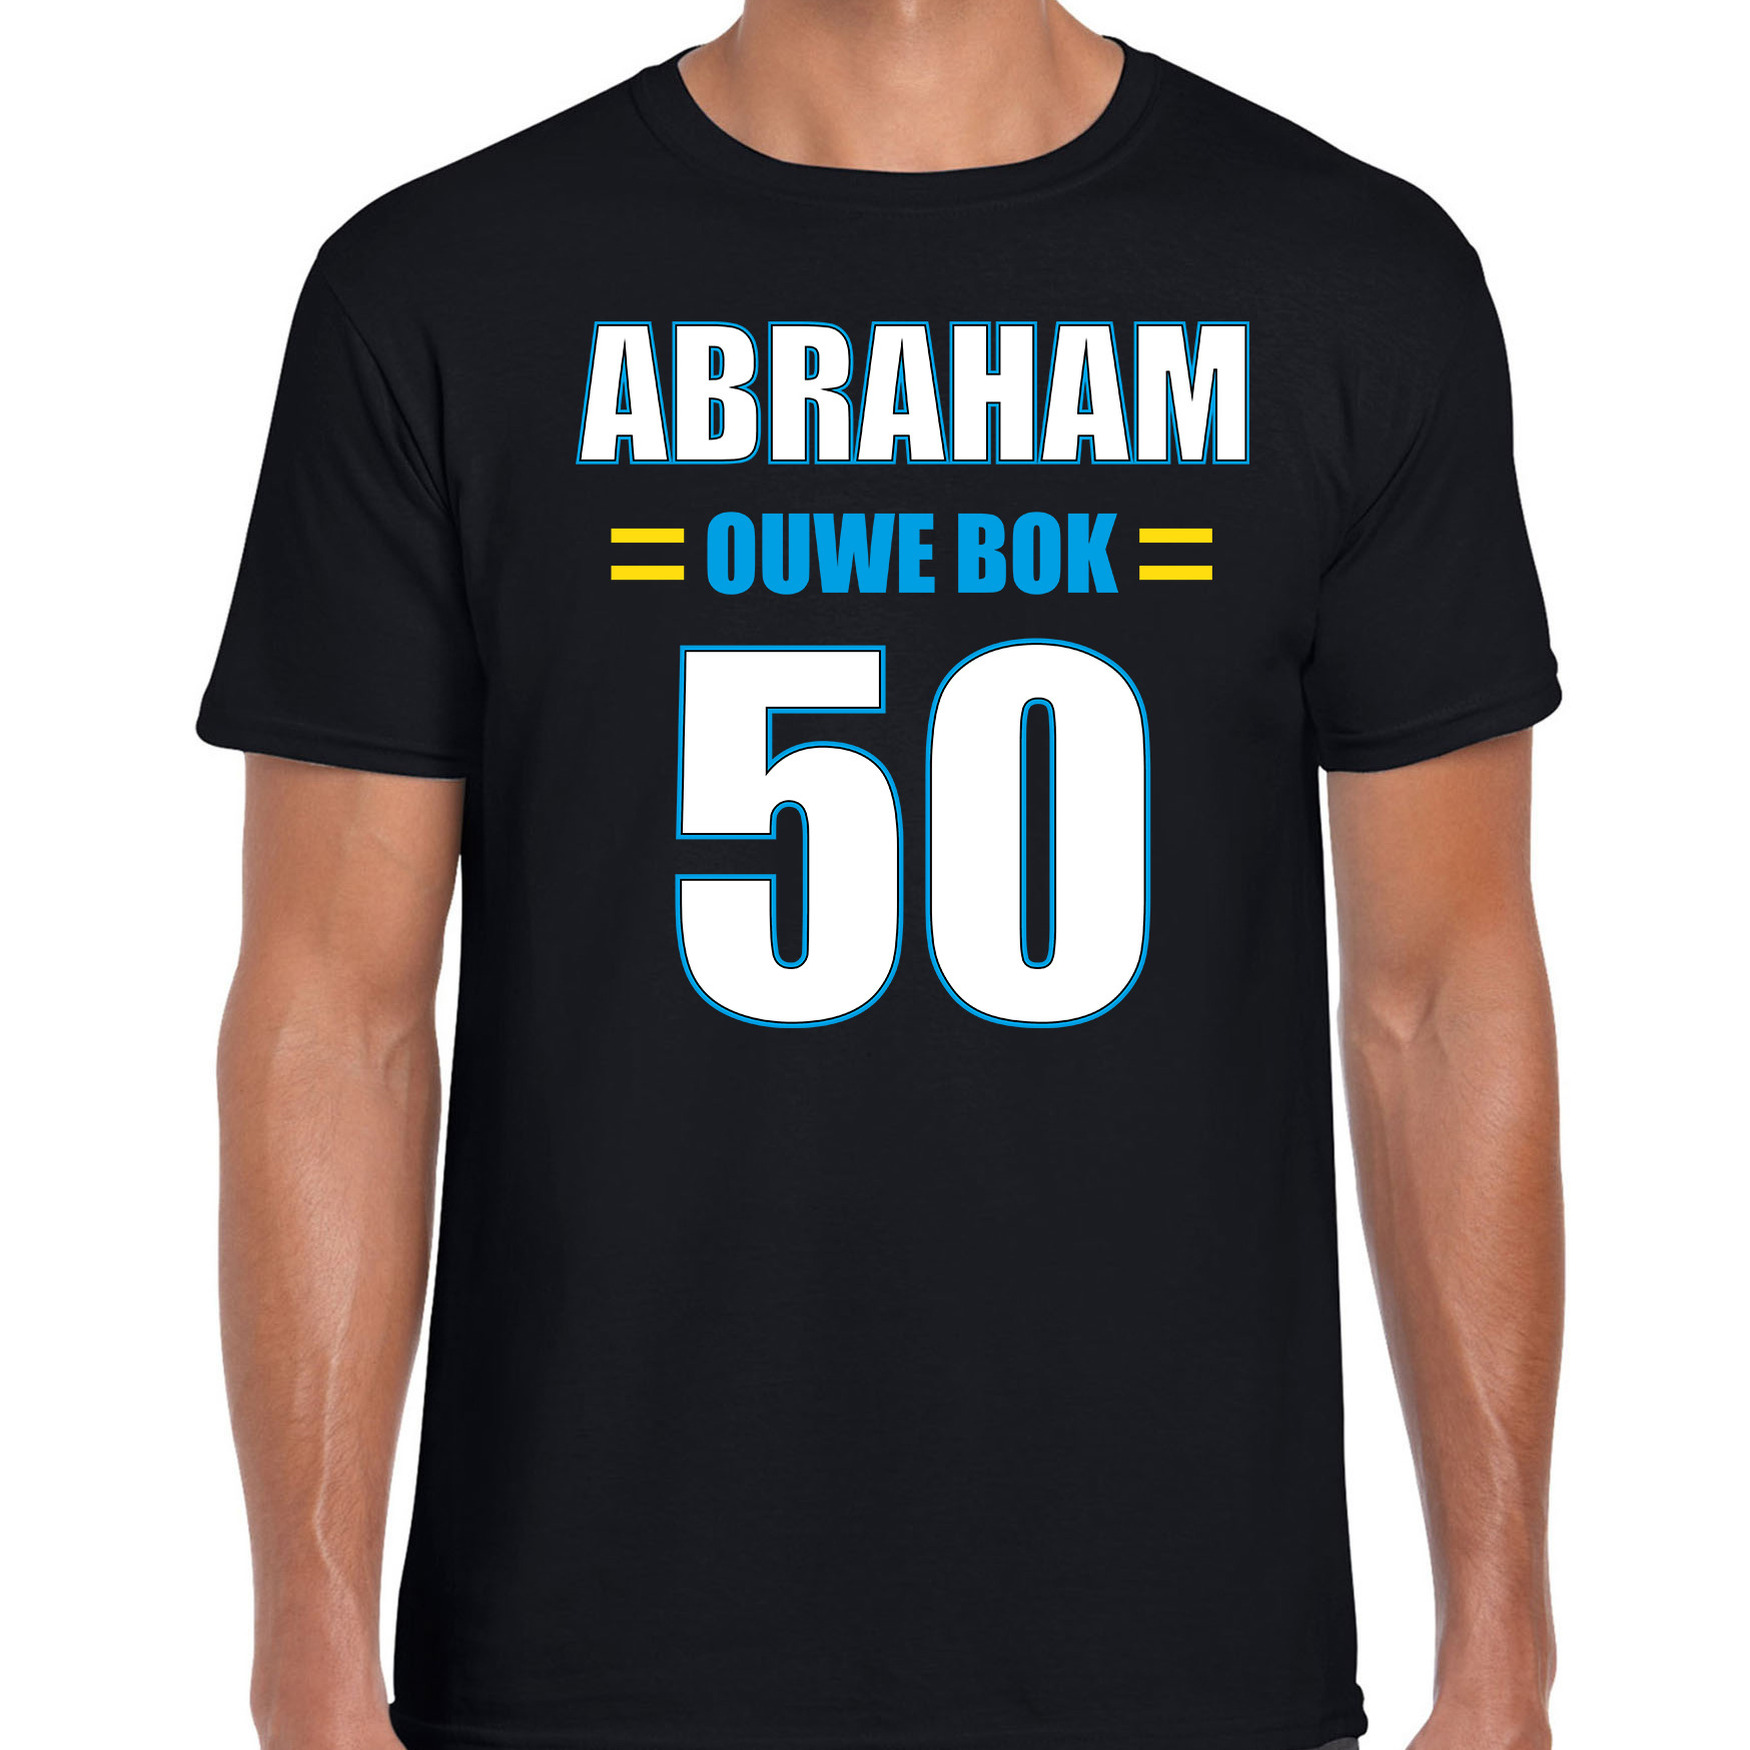 Ouwe bok 50 jaar verjaardag shirt Abraham zwart heren cadeau t-shirt